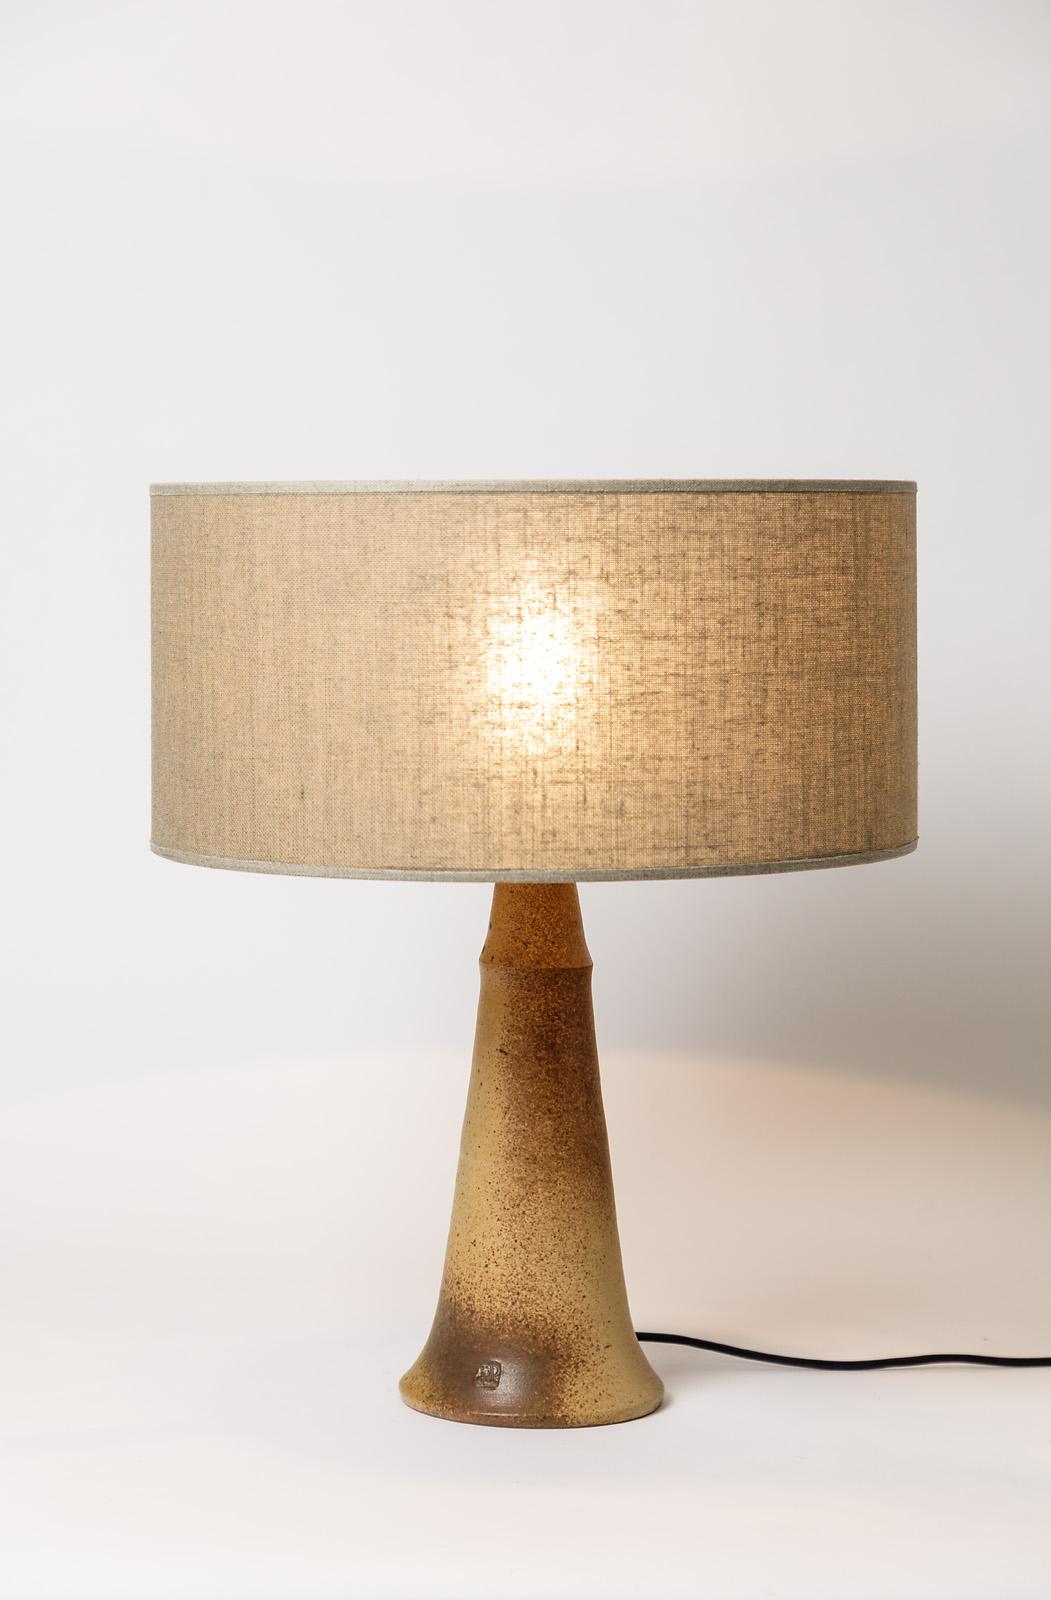 20th Century Design Ceramic Table Lamp by JJ Prolongeau circa 1970 Brown Color For Sale 2